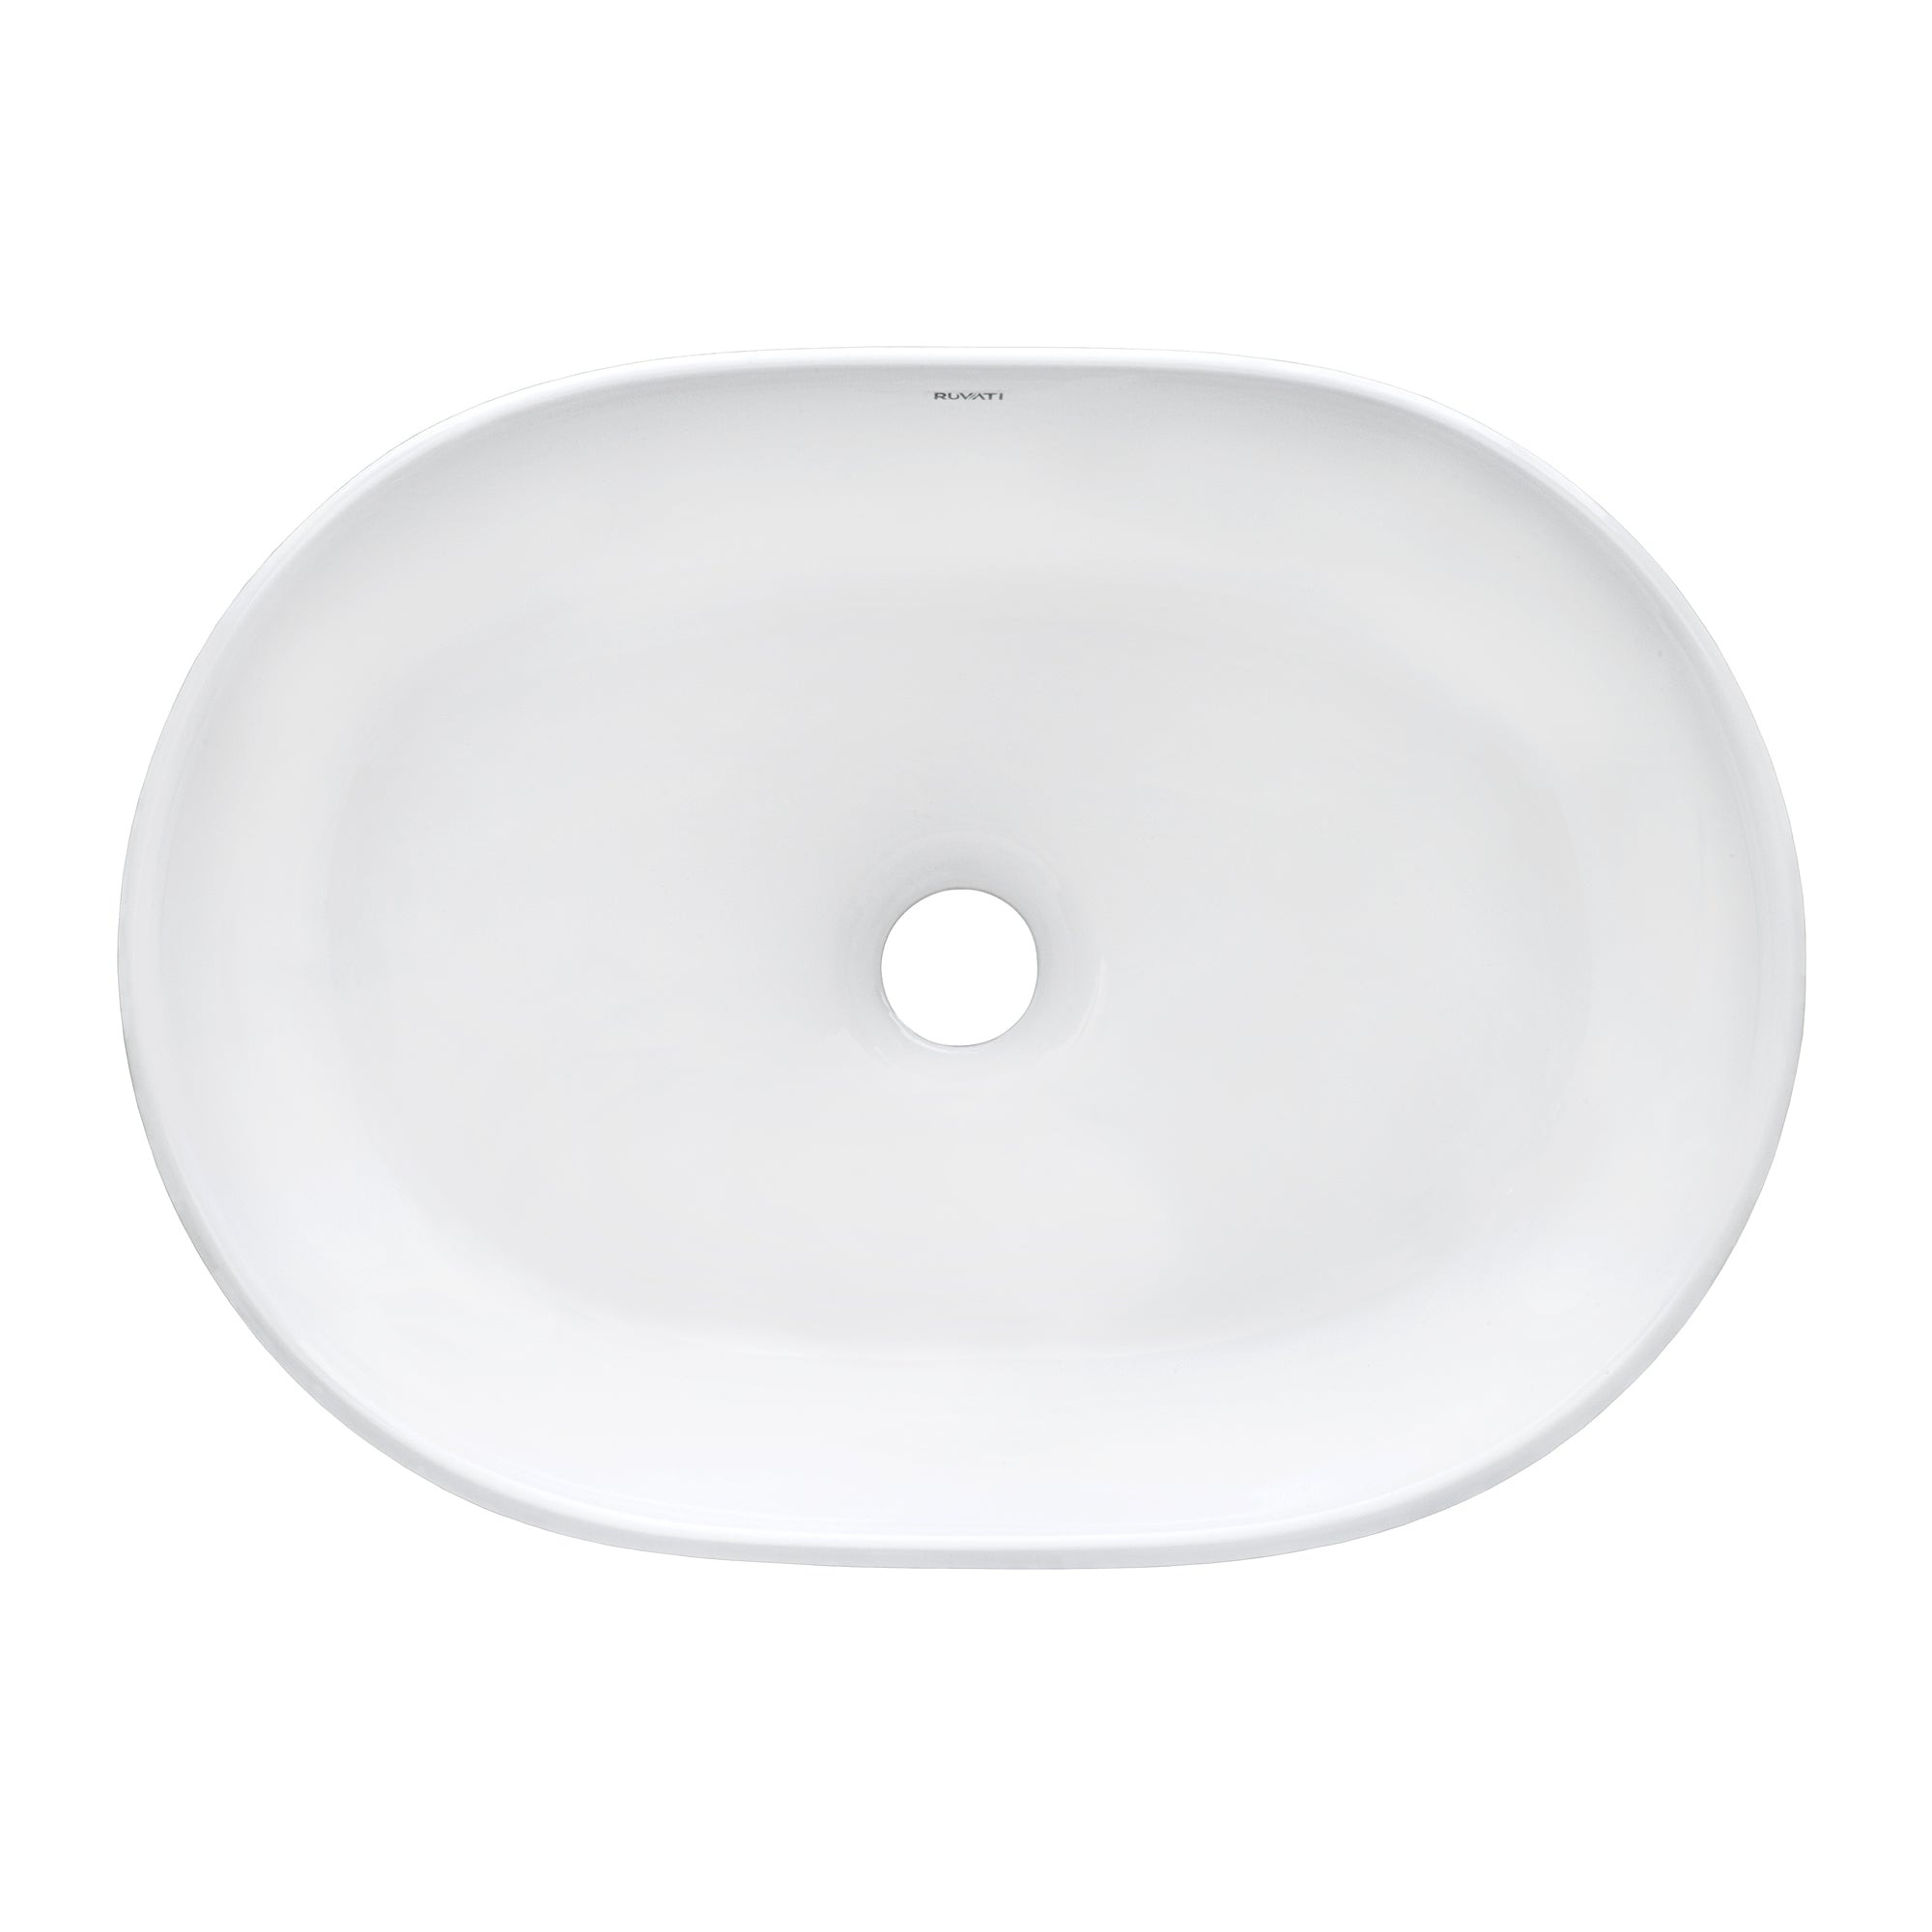 Ruvati 19" x 14" Oval Bathroom Vessel Sink in White